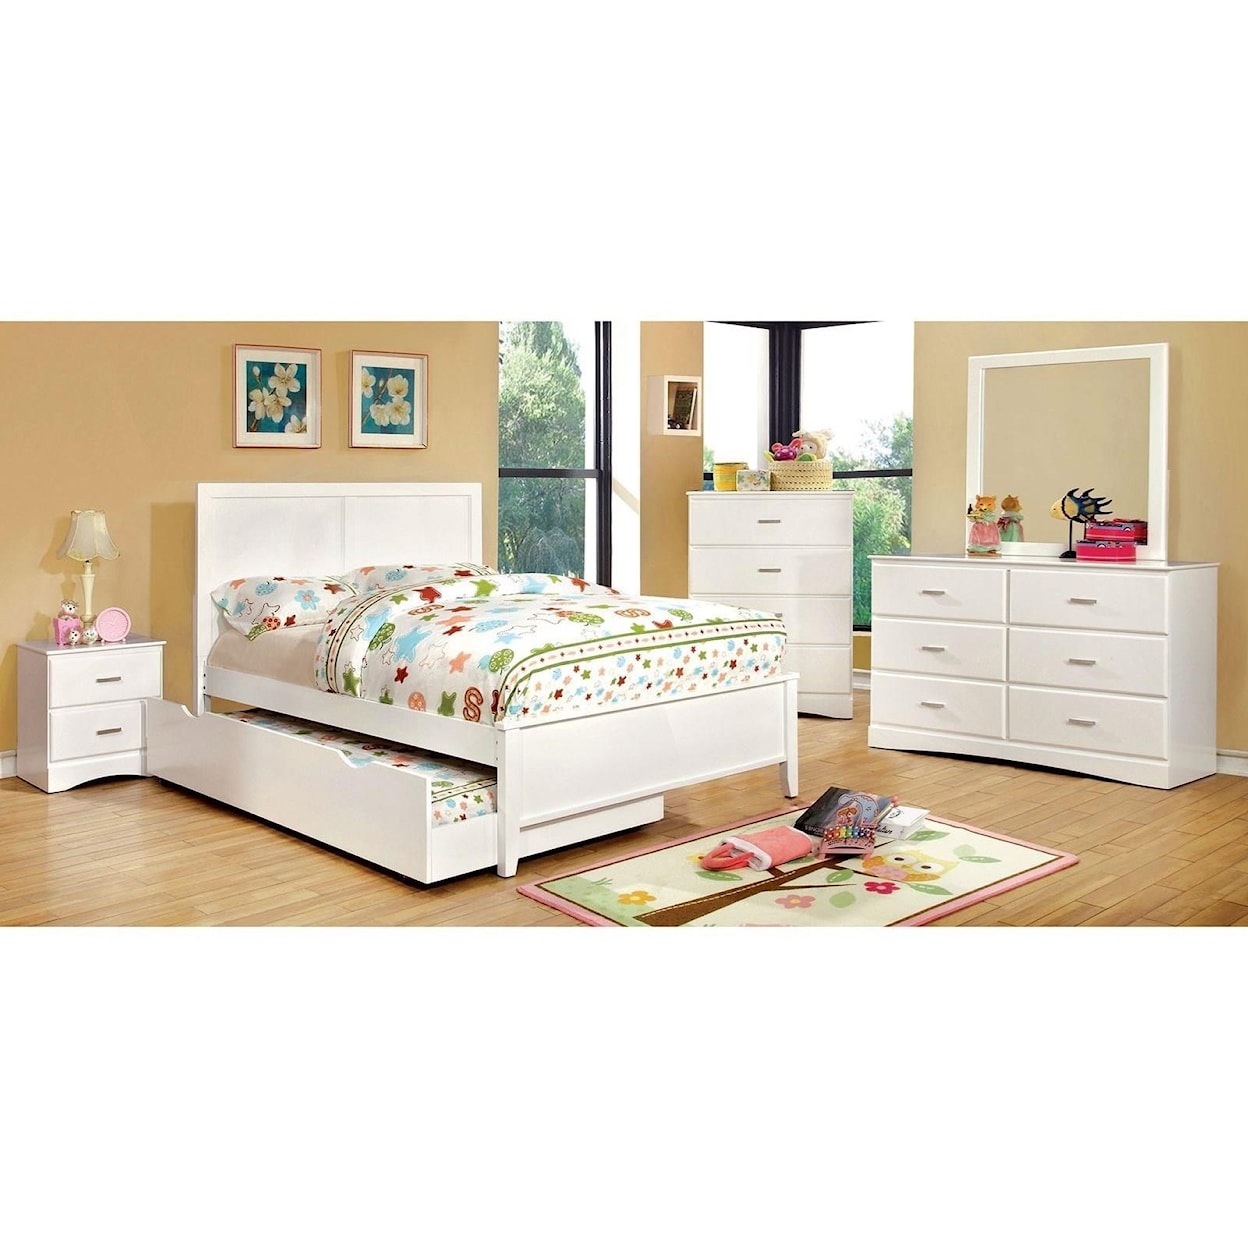 Furniture of America Prismo Full Bedroom Group